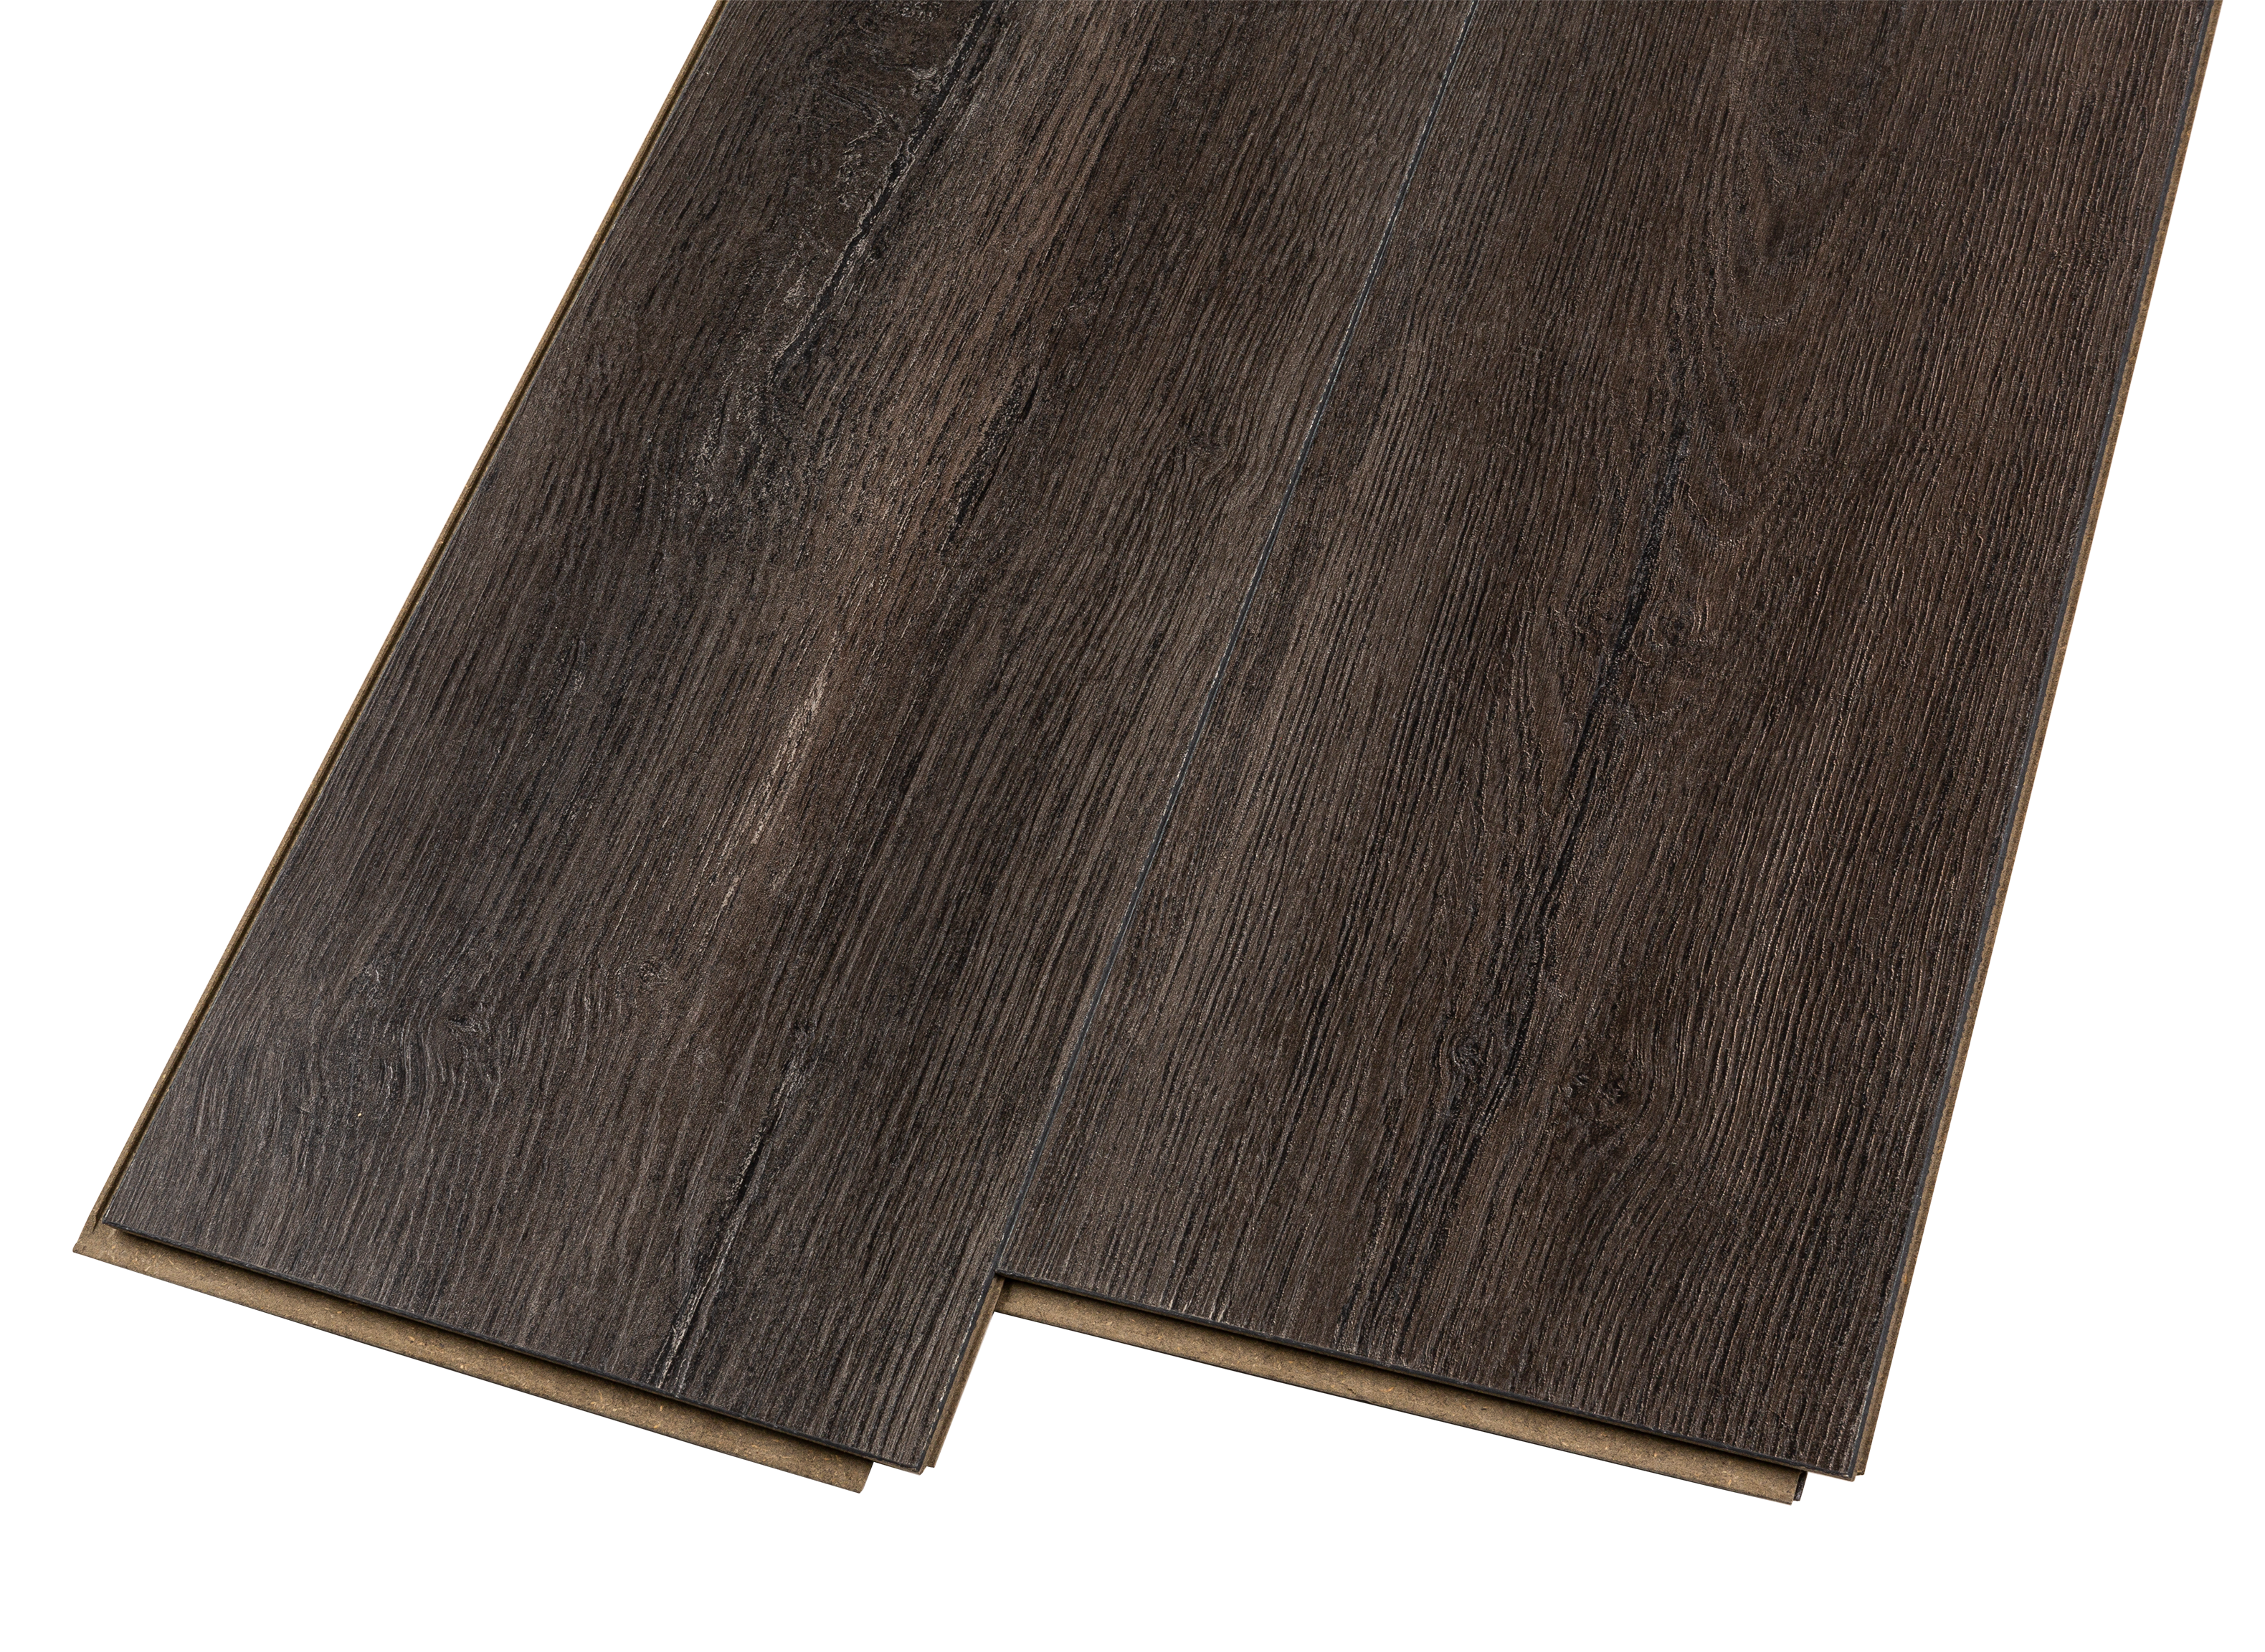 Any experience with Duravana line of flooring from lumber liquidators?